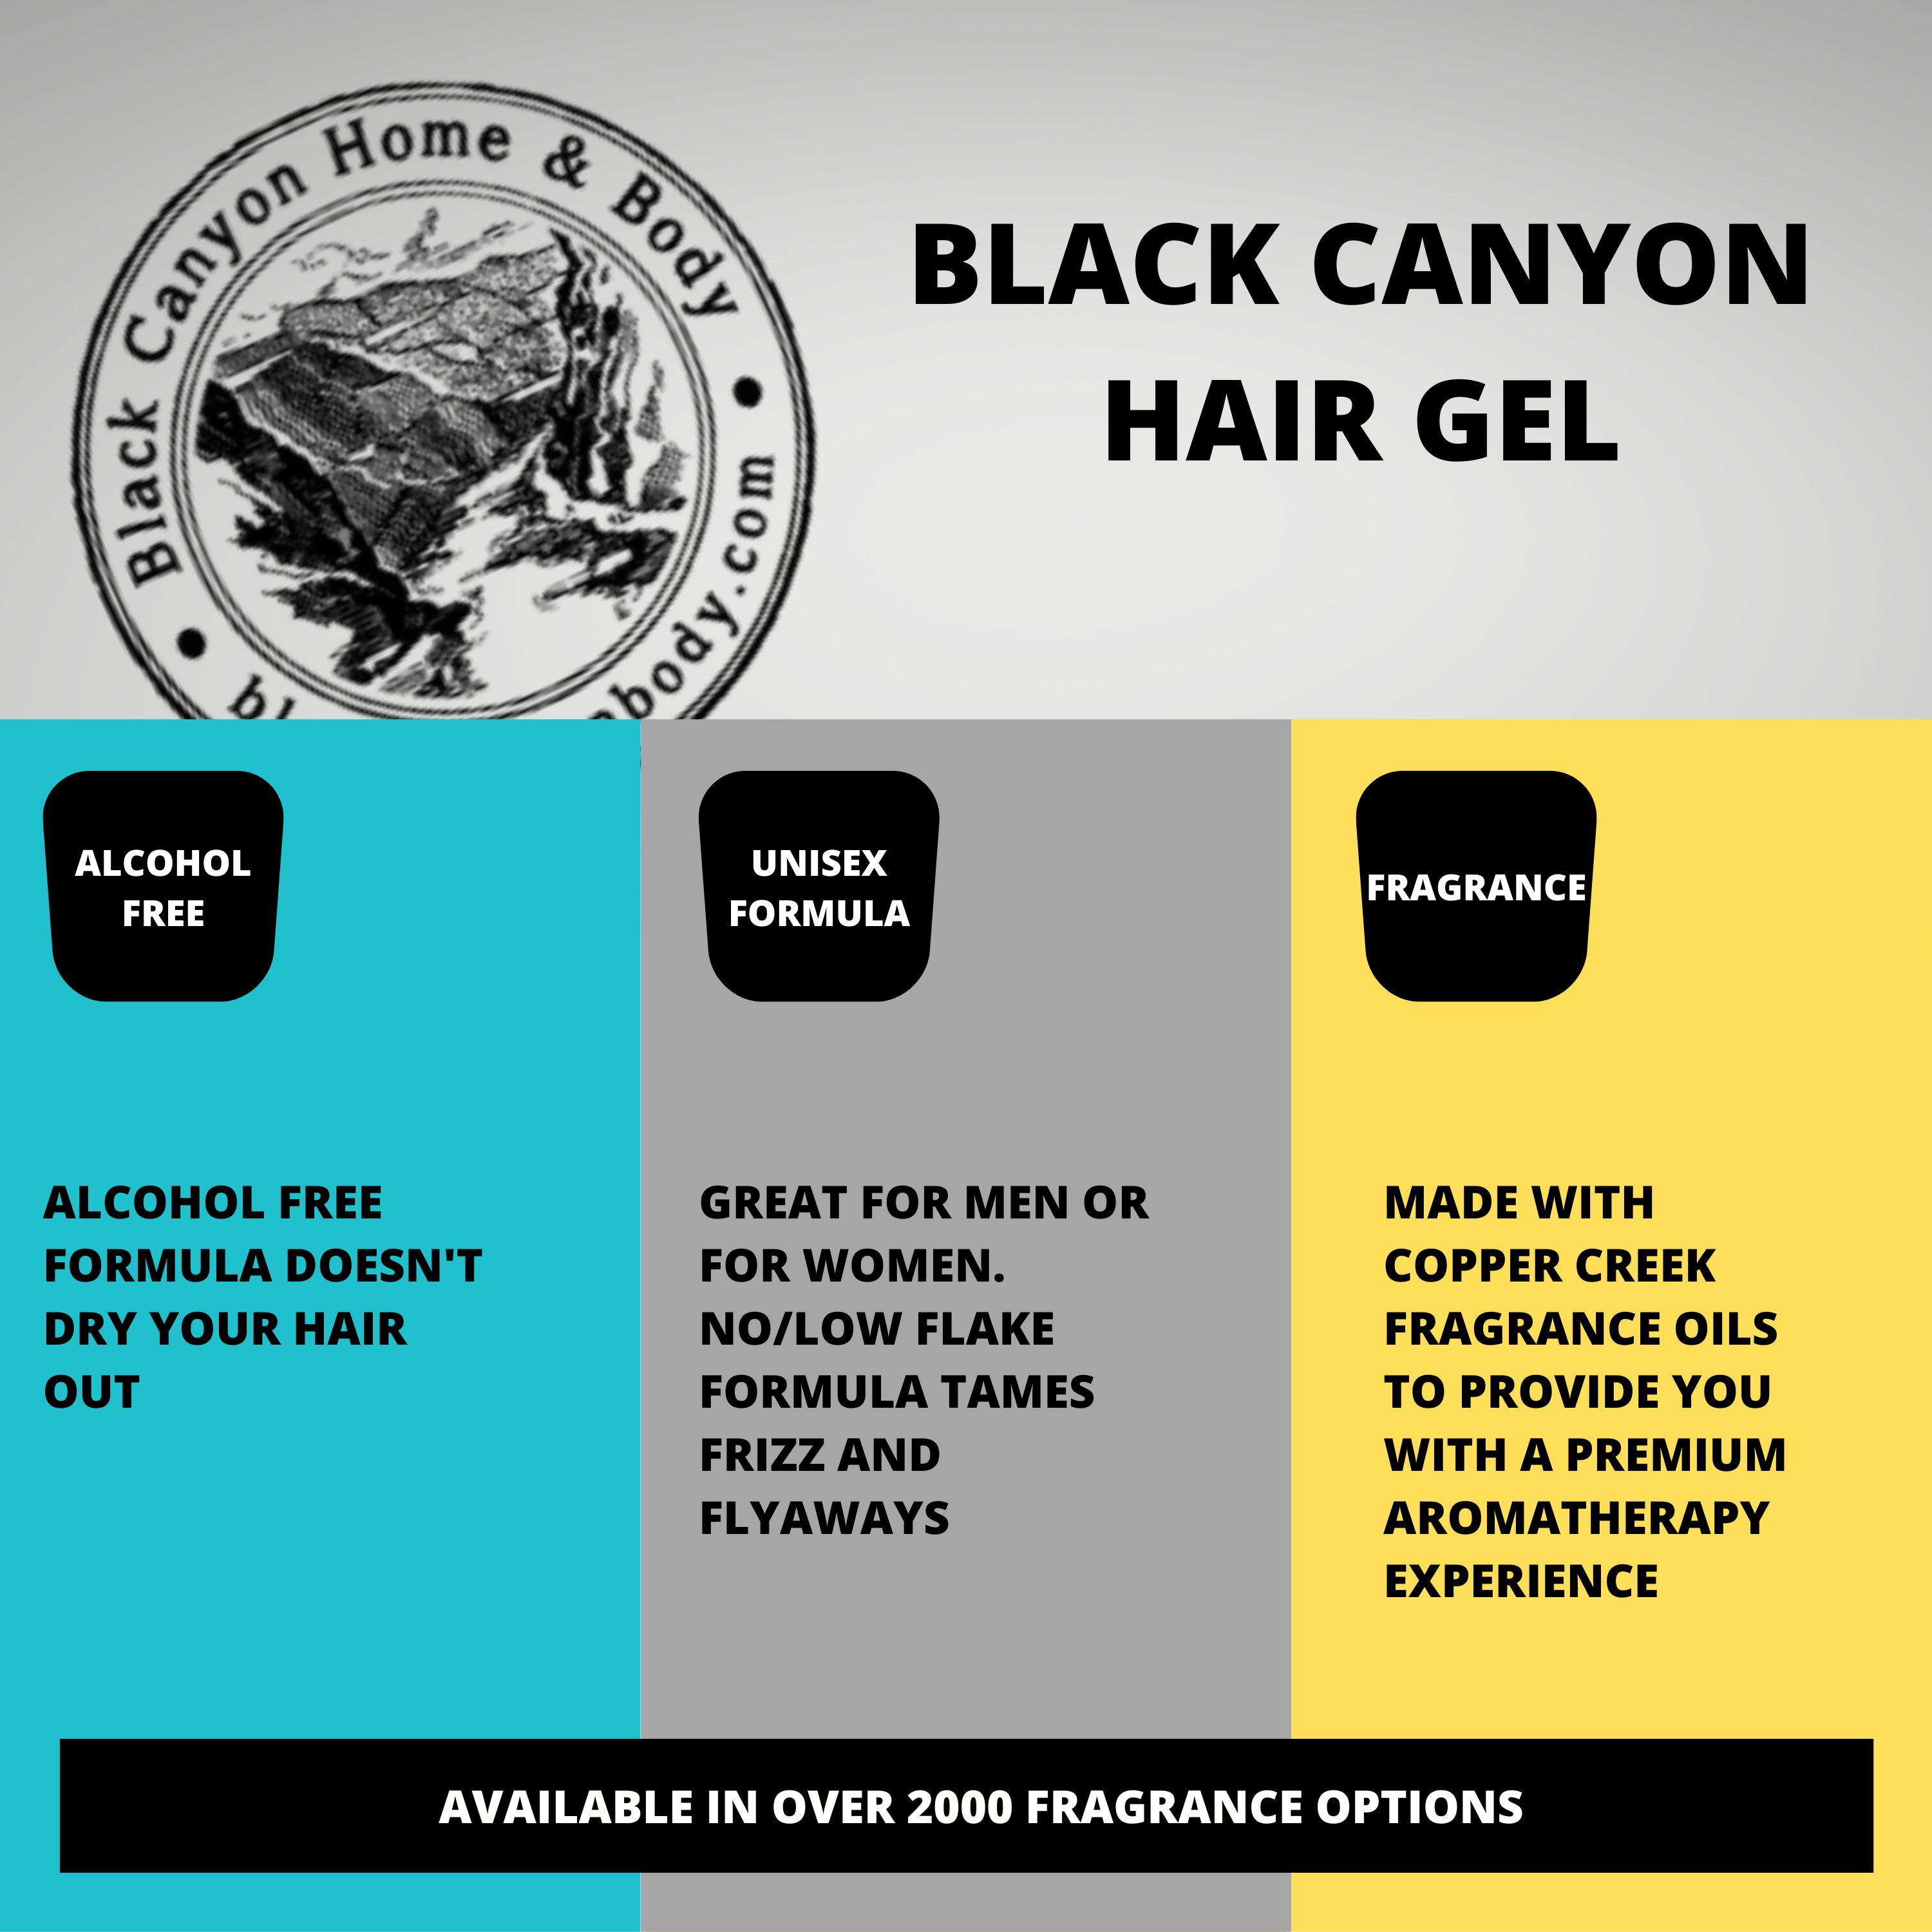 Black Canyon Wild Cherry Vanilla Scented Hair Gel